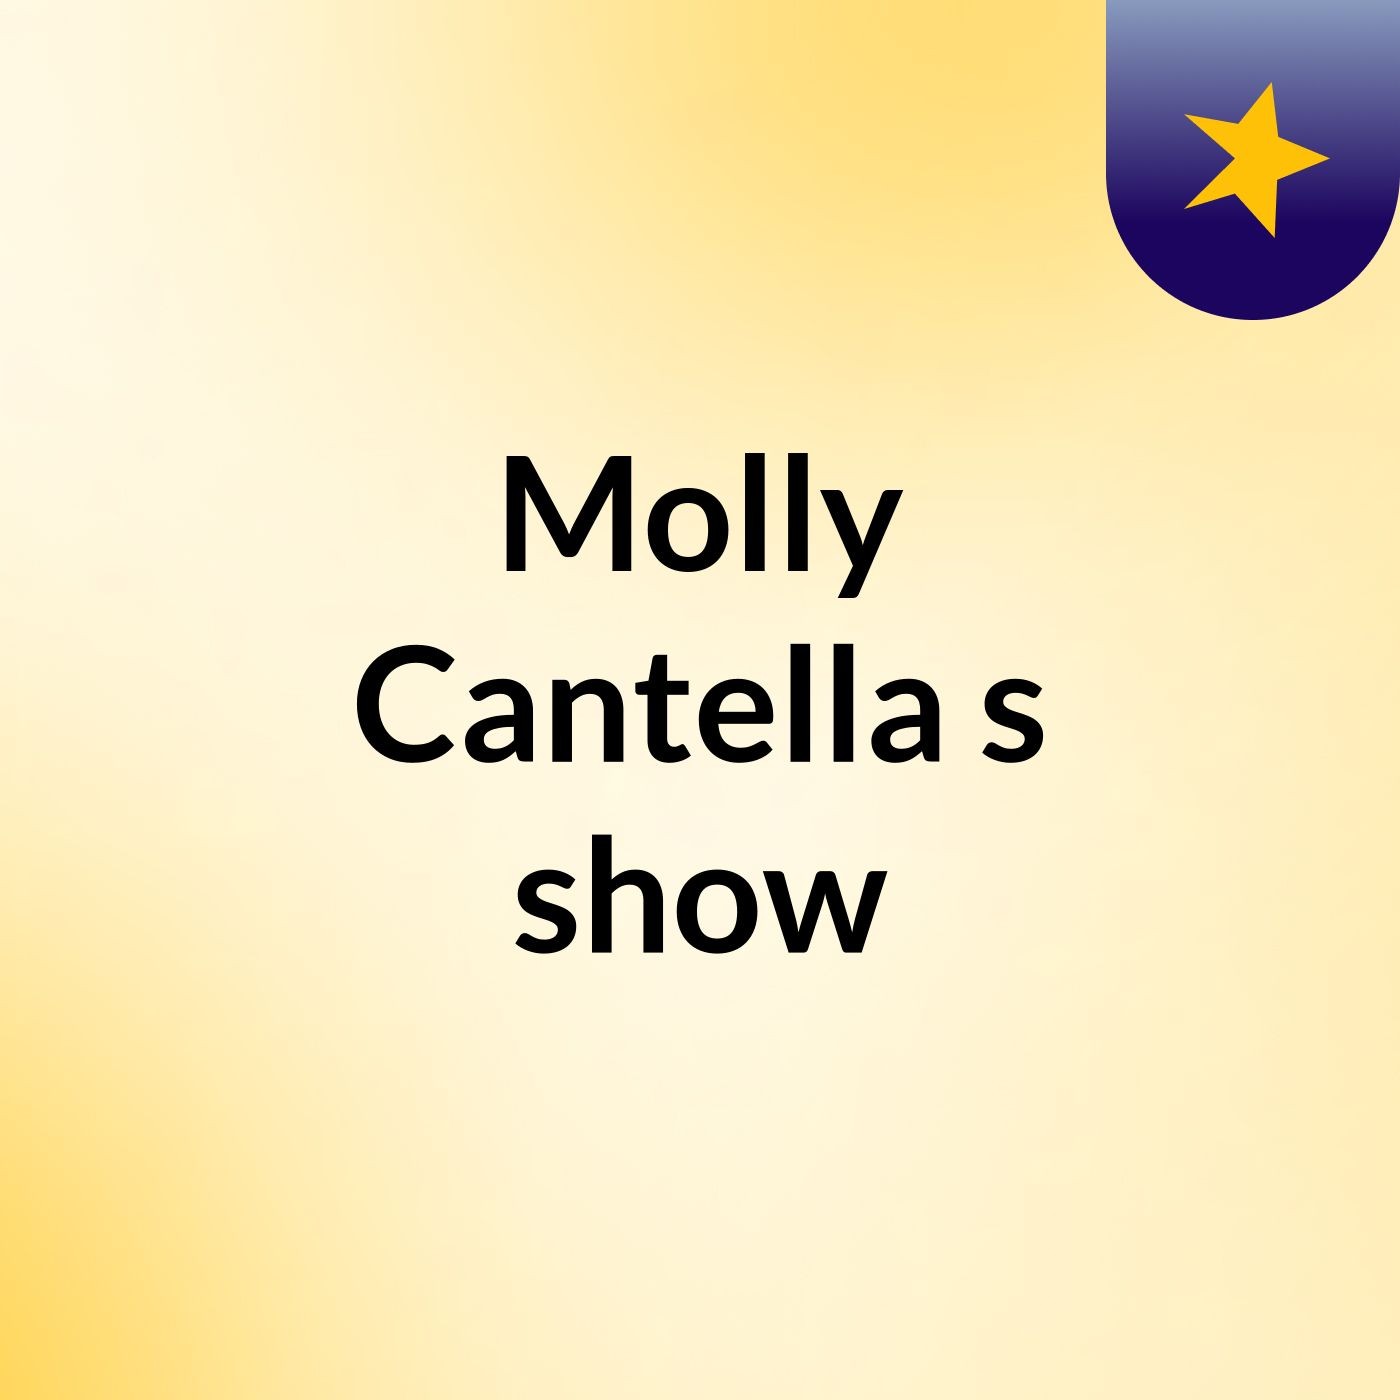 Molly Cantella's show